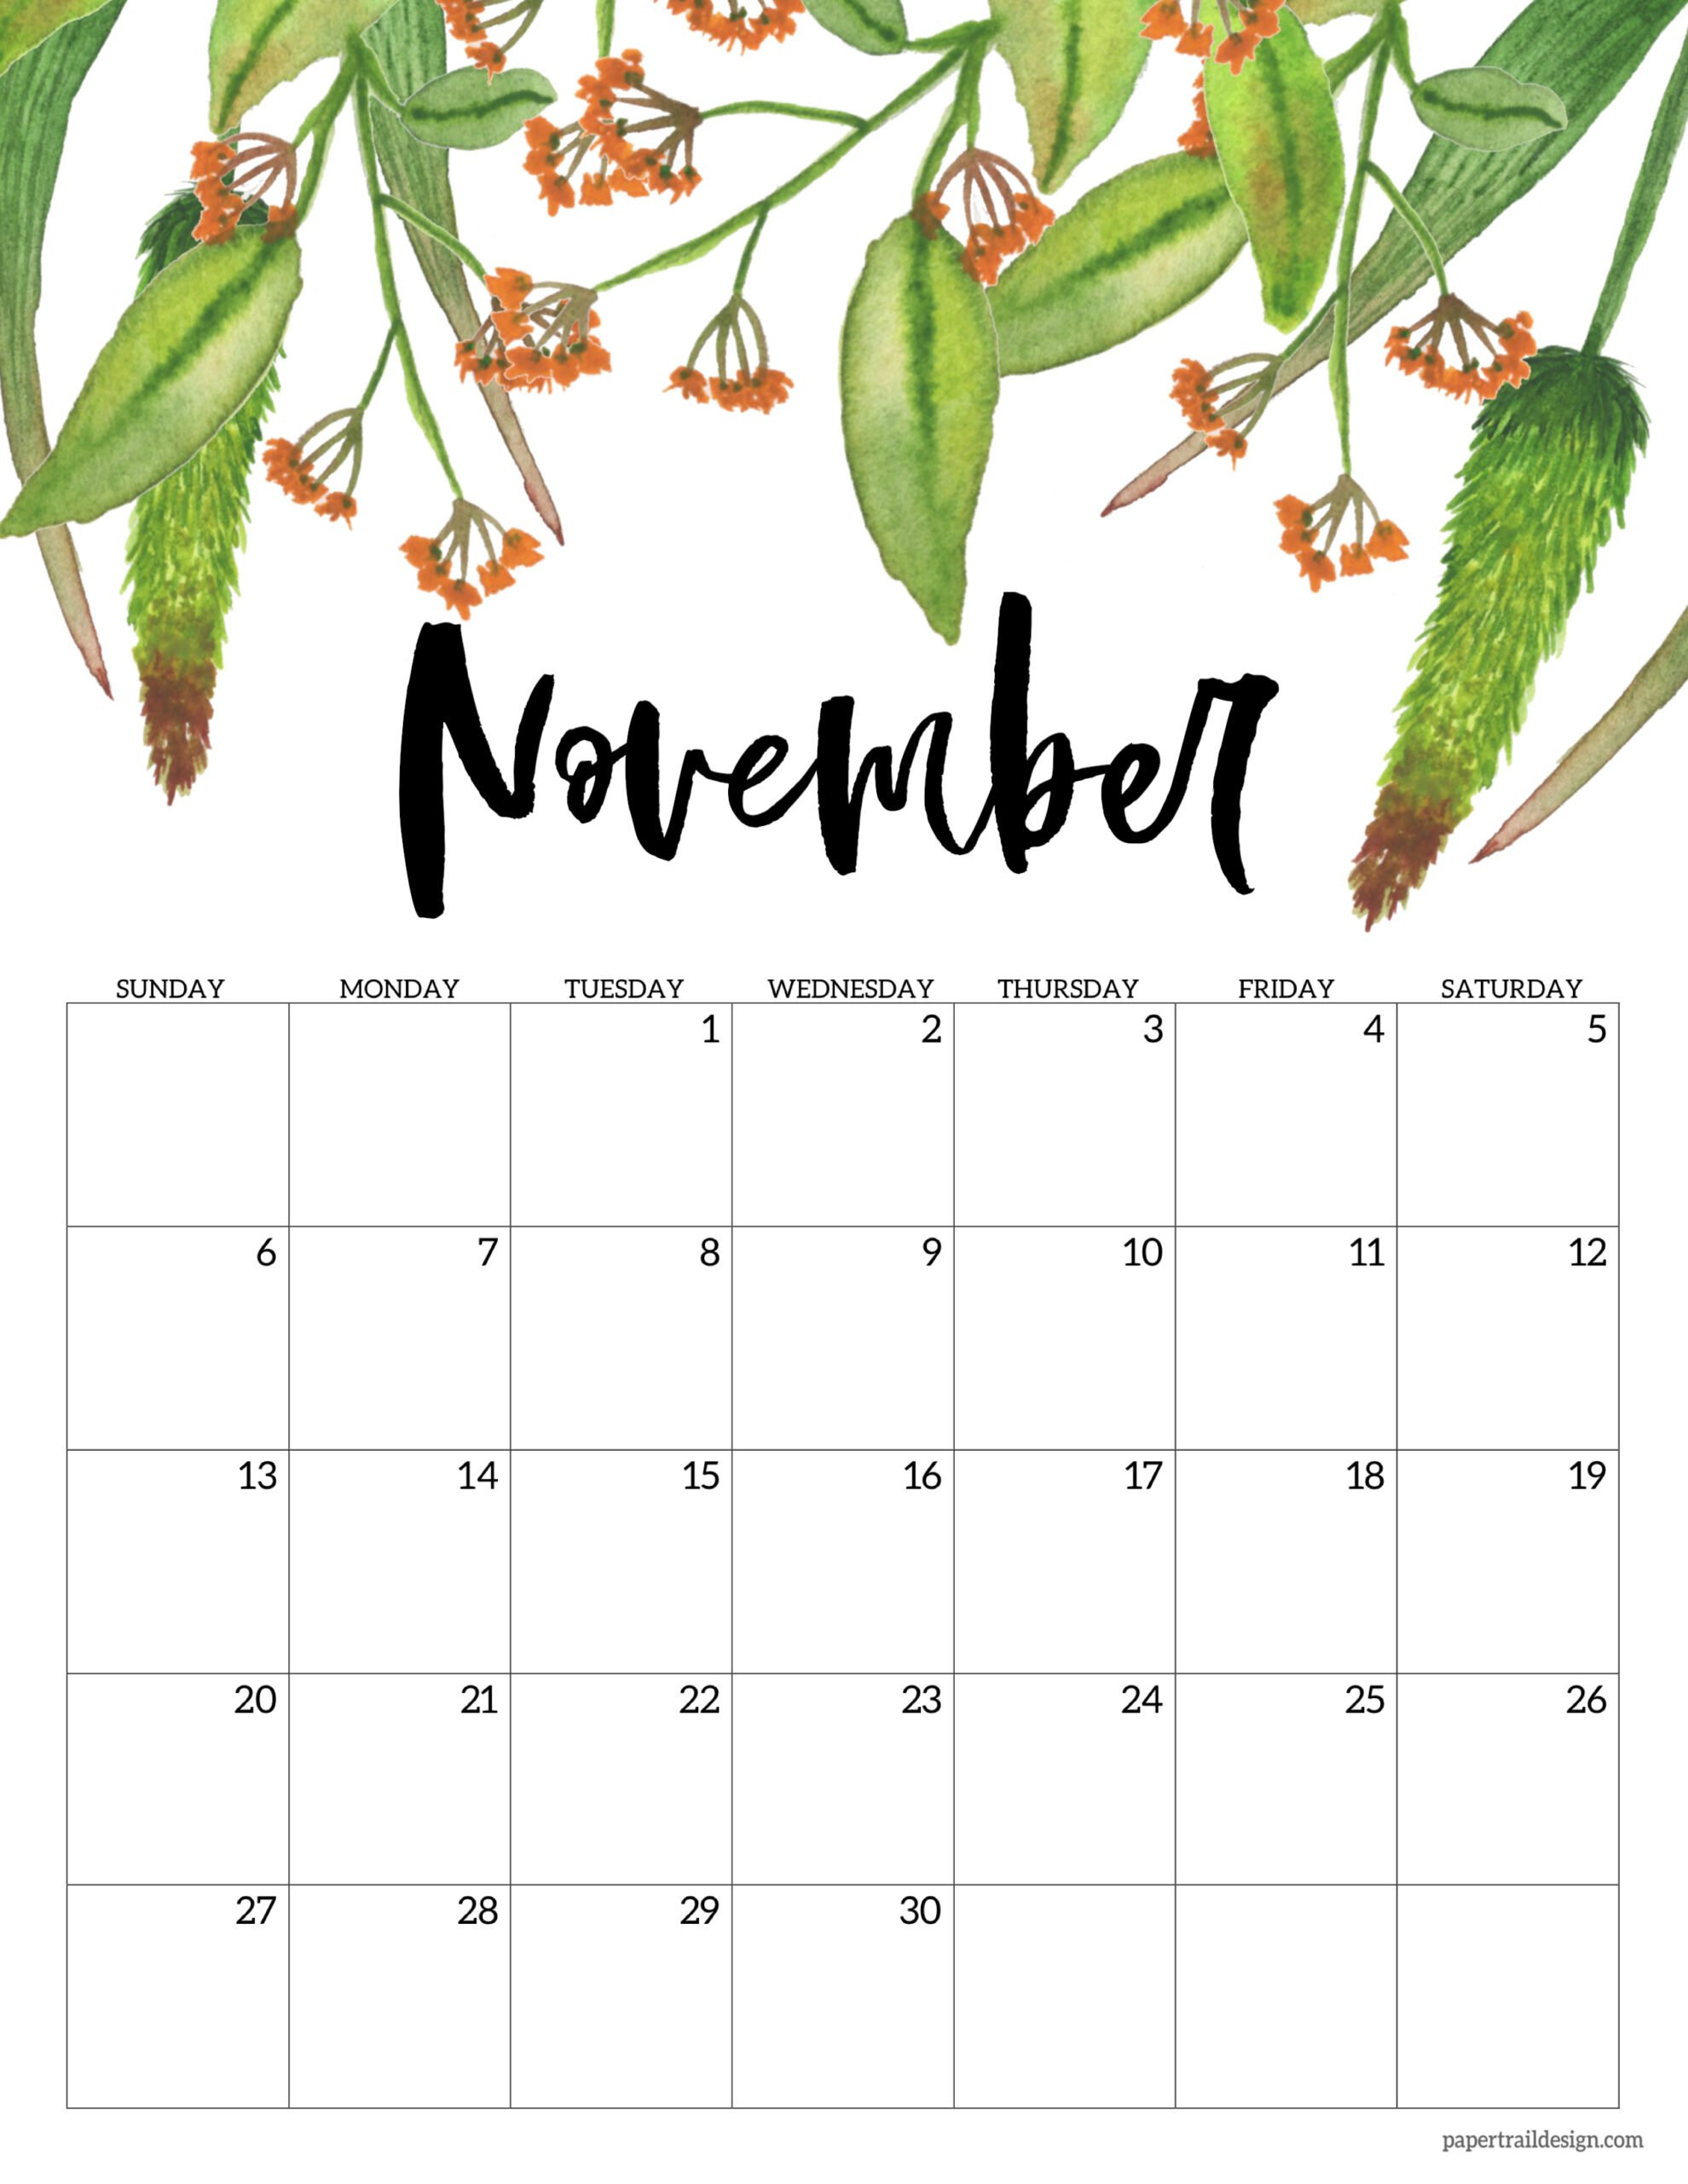 Month november. Календарь ноябрь. Календарь ноябрь 2021. Красивый календарь. Календарь для распечатки.